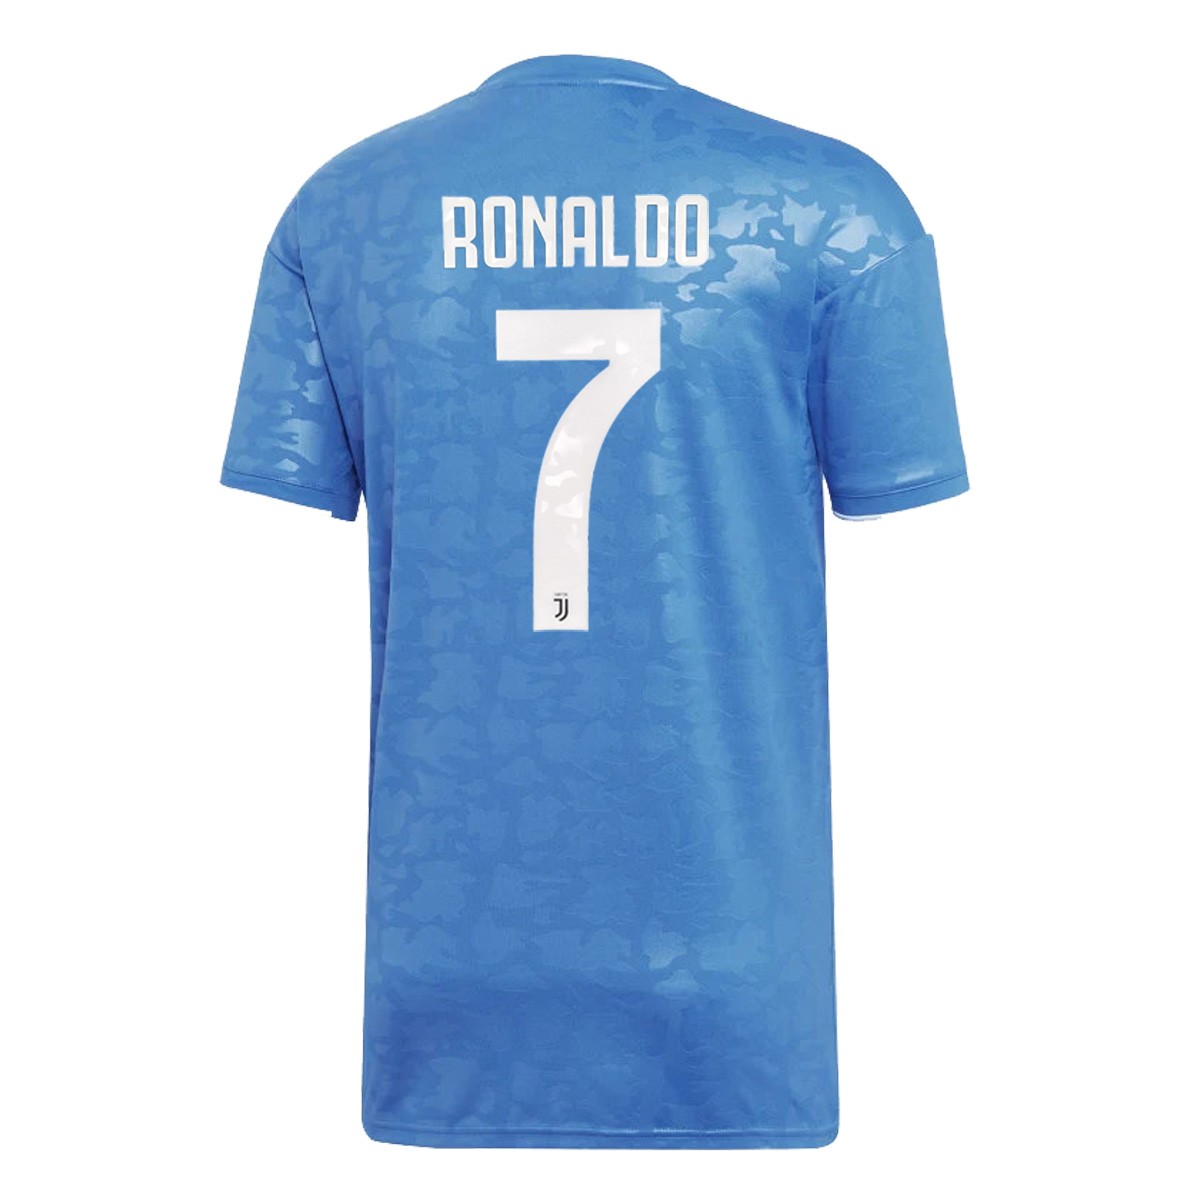 ronaldo 2019 jersey